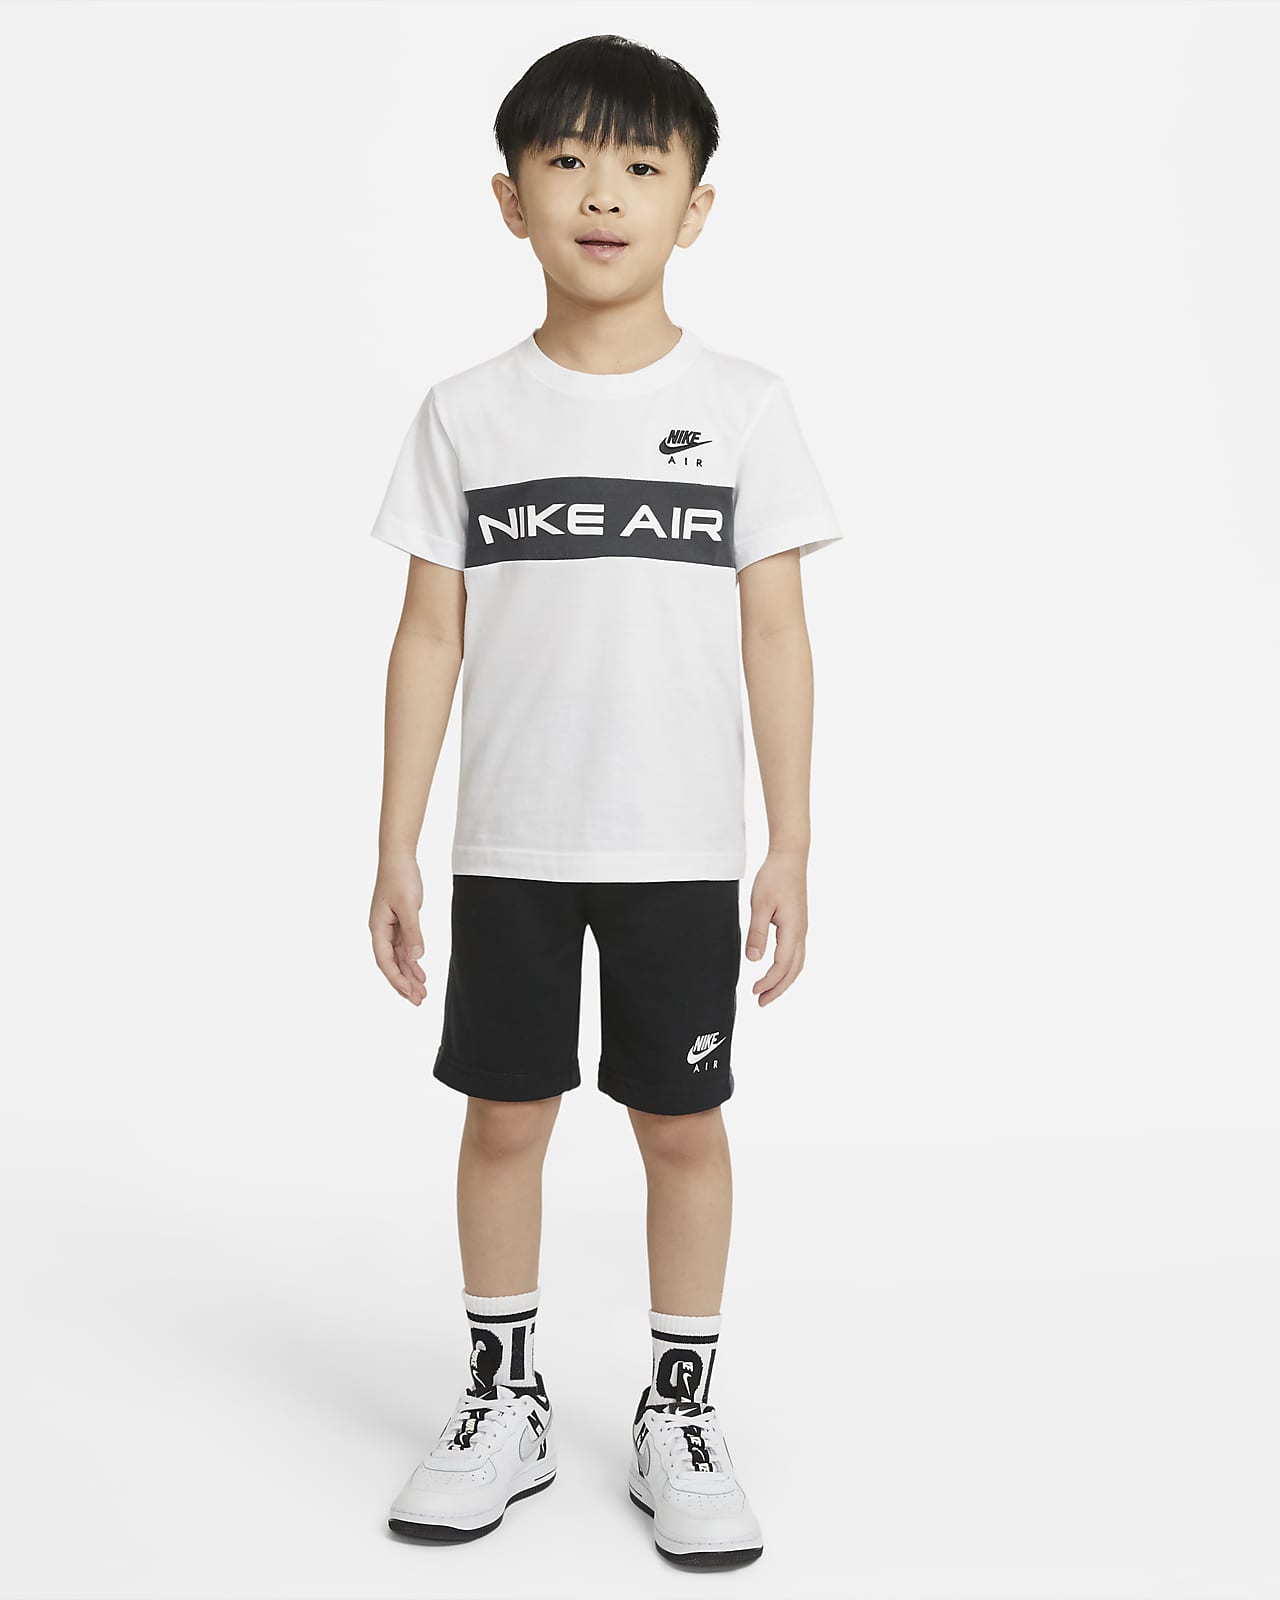 Nike Air Little Kids' T-Shirt and 